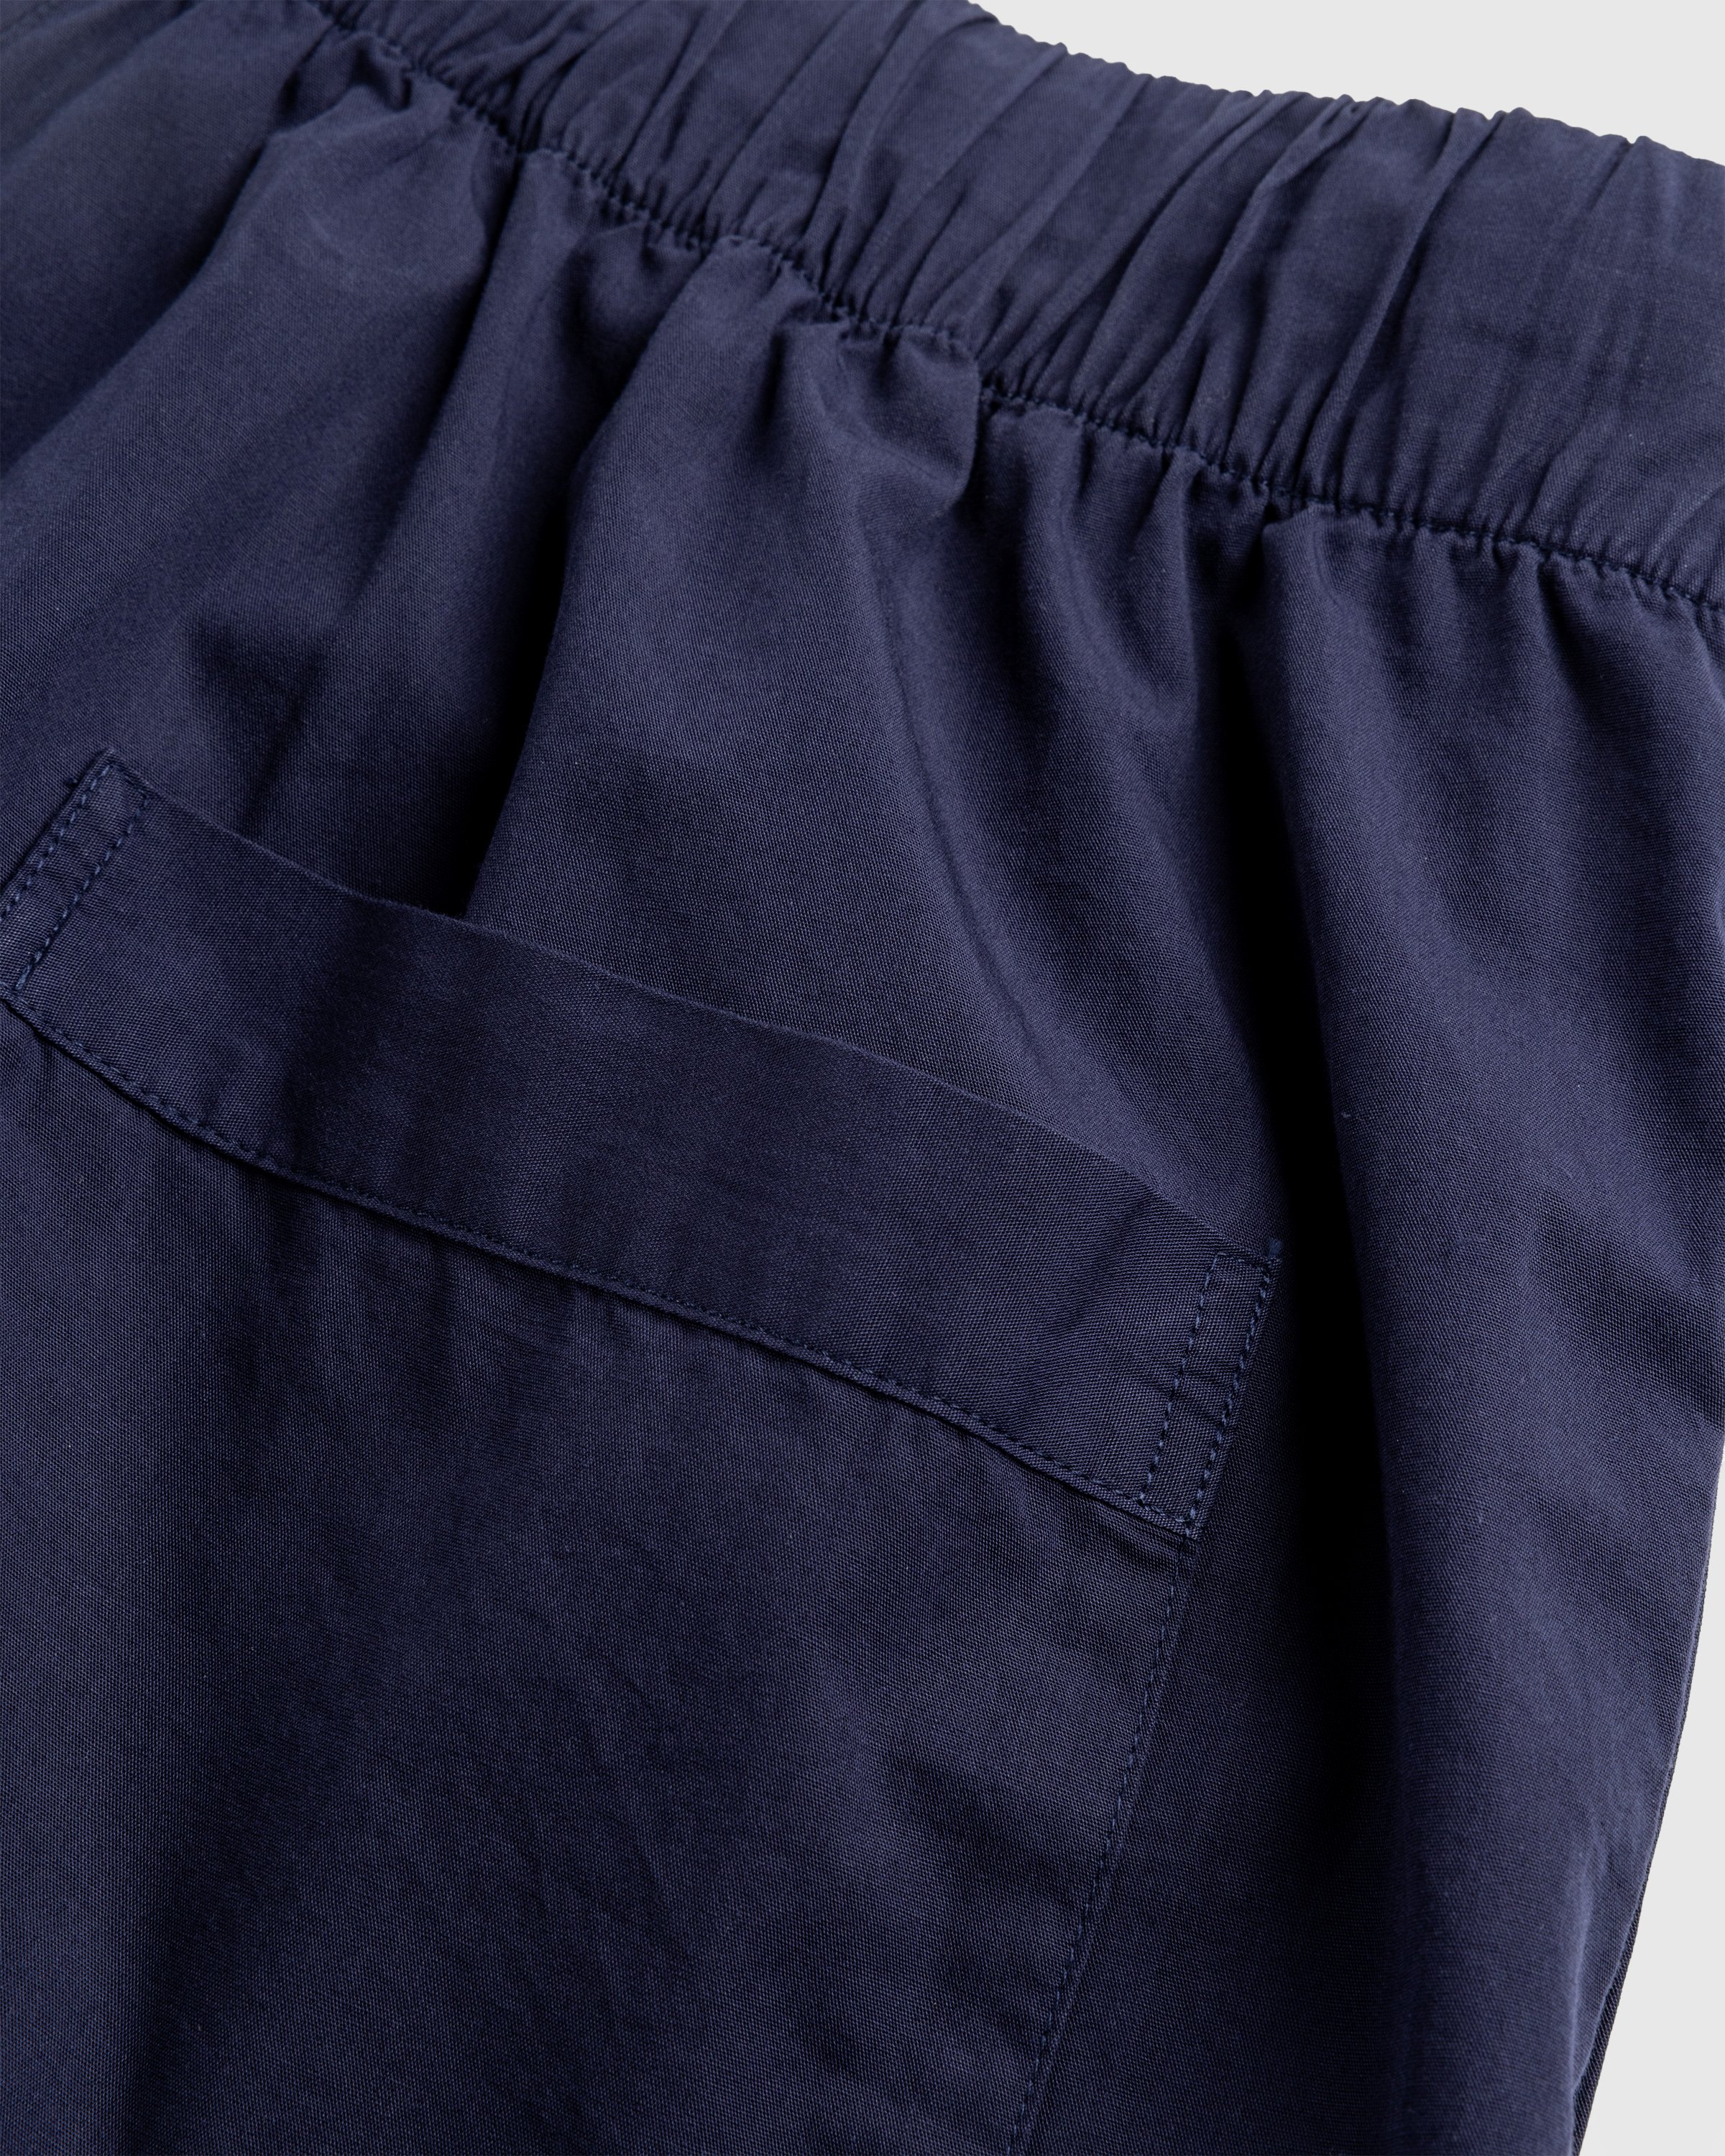 Tekla - Cotton Poplin - Pyjamas Pants True Navy - Clothing - Blue - Image 7